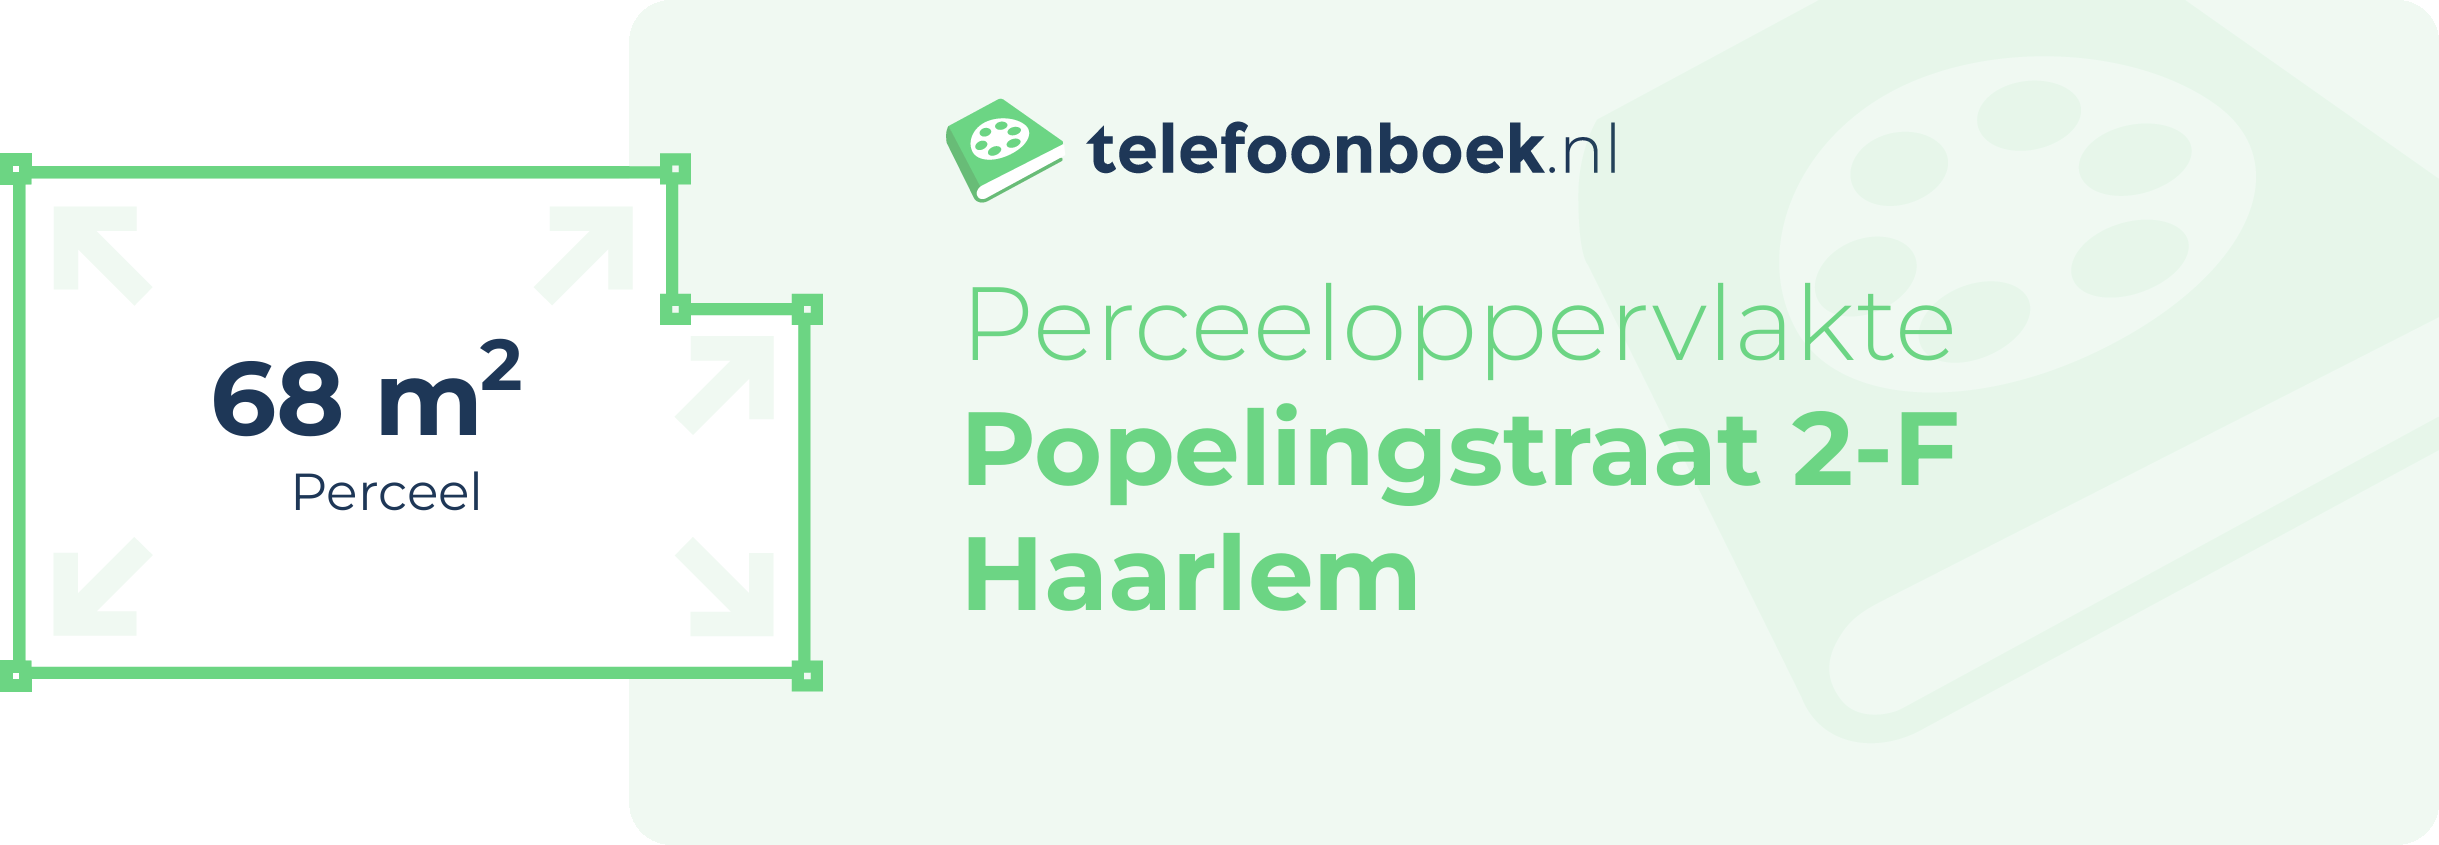 Perceeloppervlakte Popelingstraat 2-F Haarlem